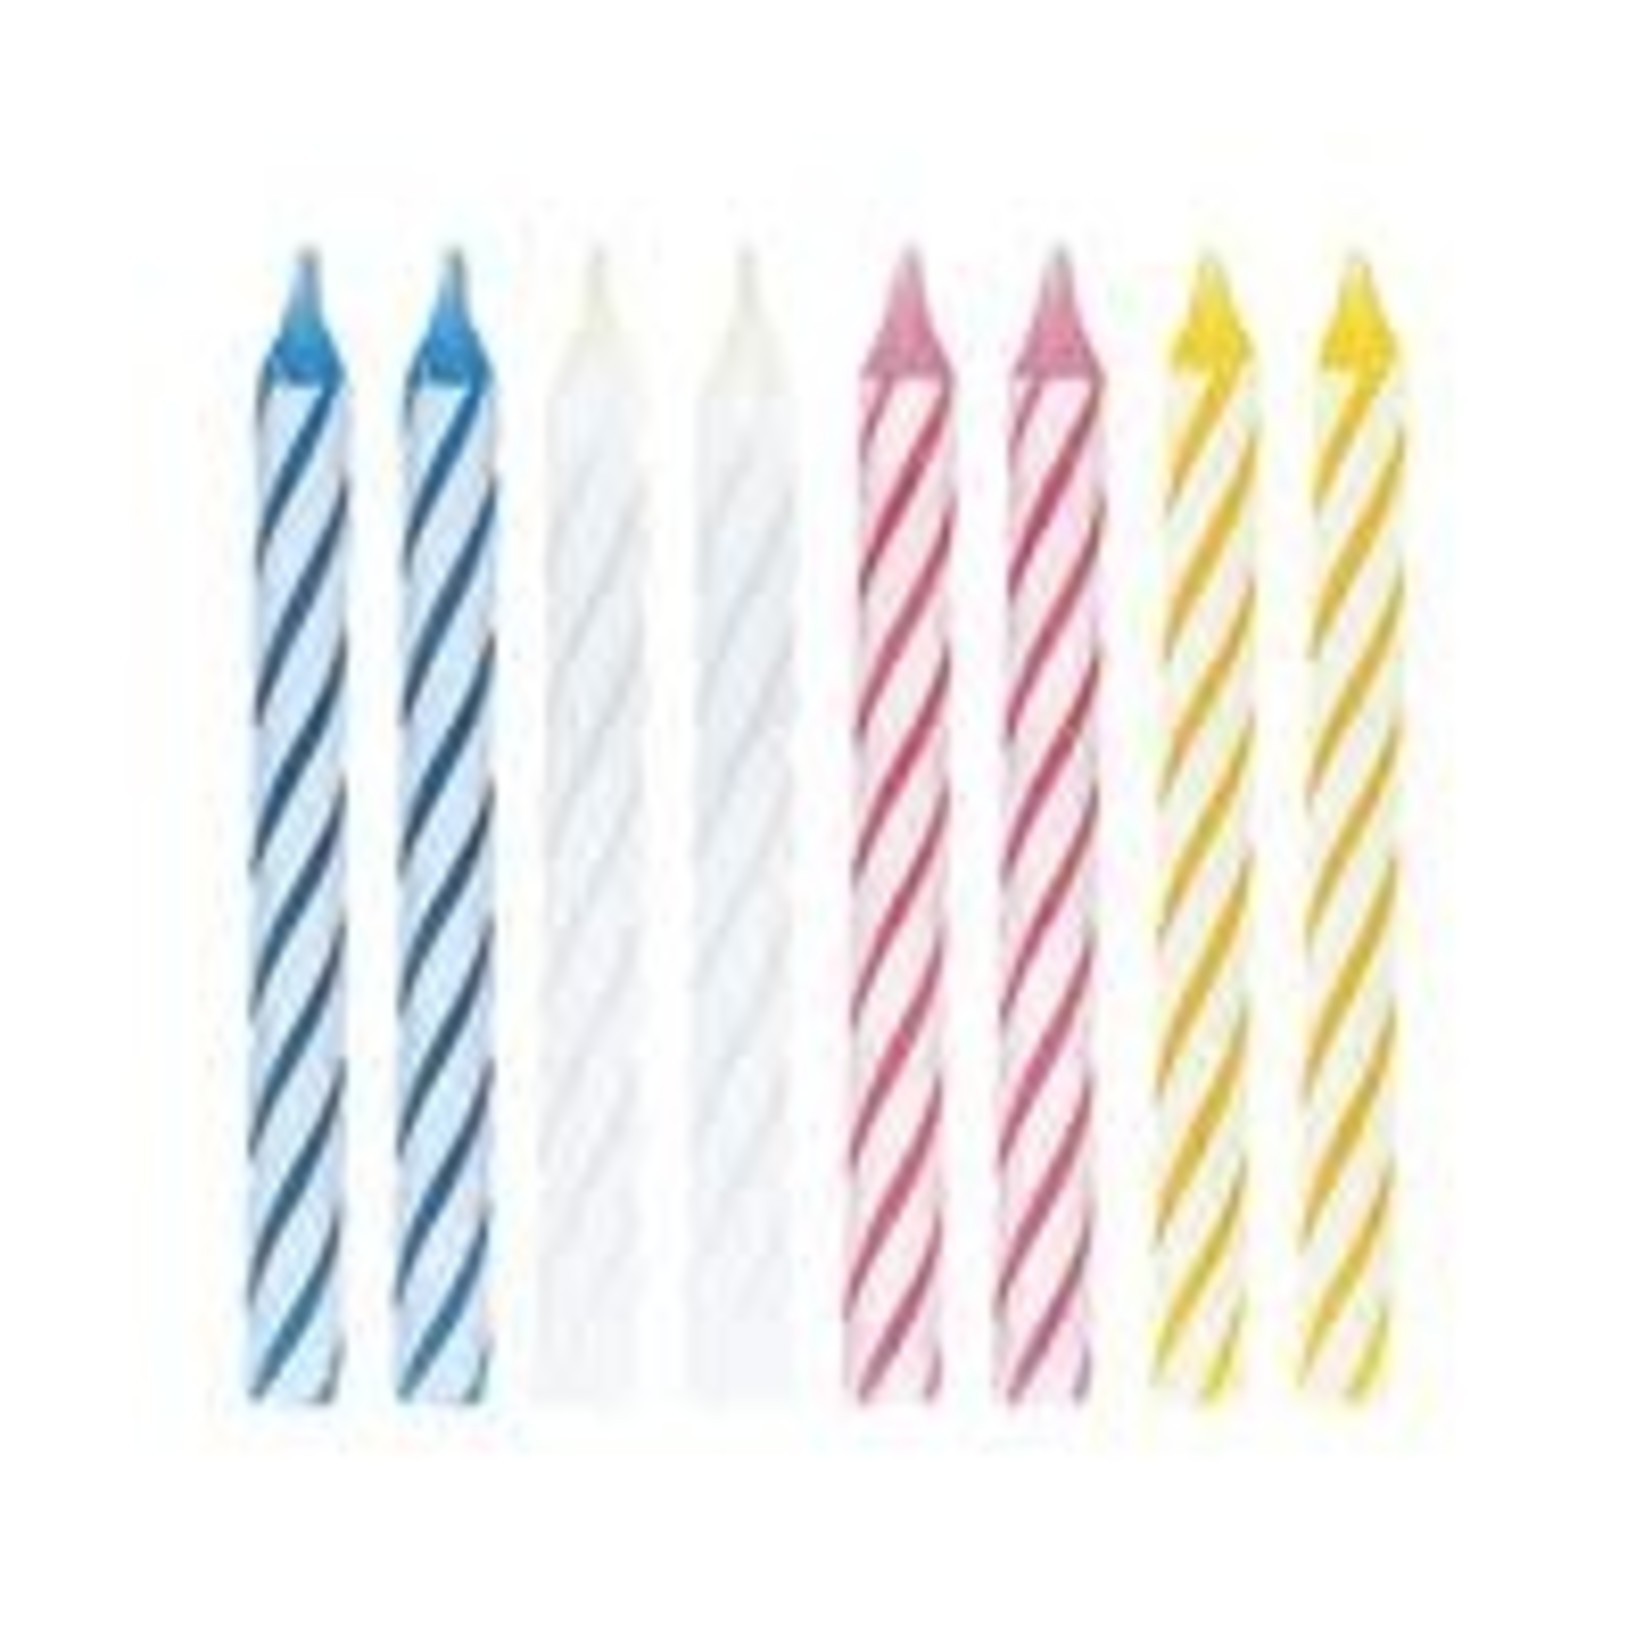 unique Multi-Color Spiral Birthday Candles - 24ct.